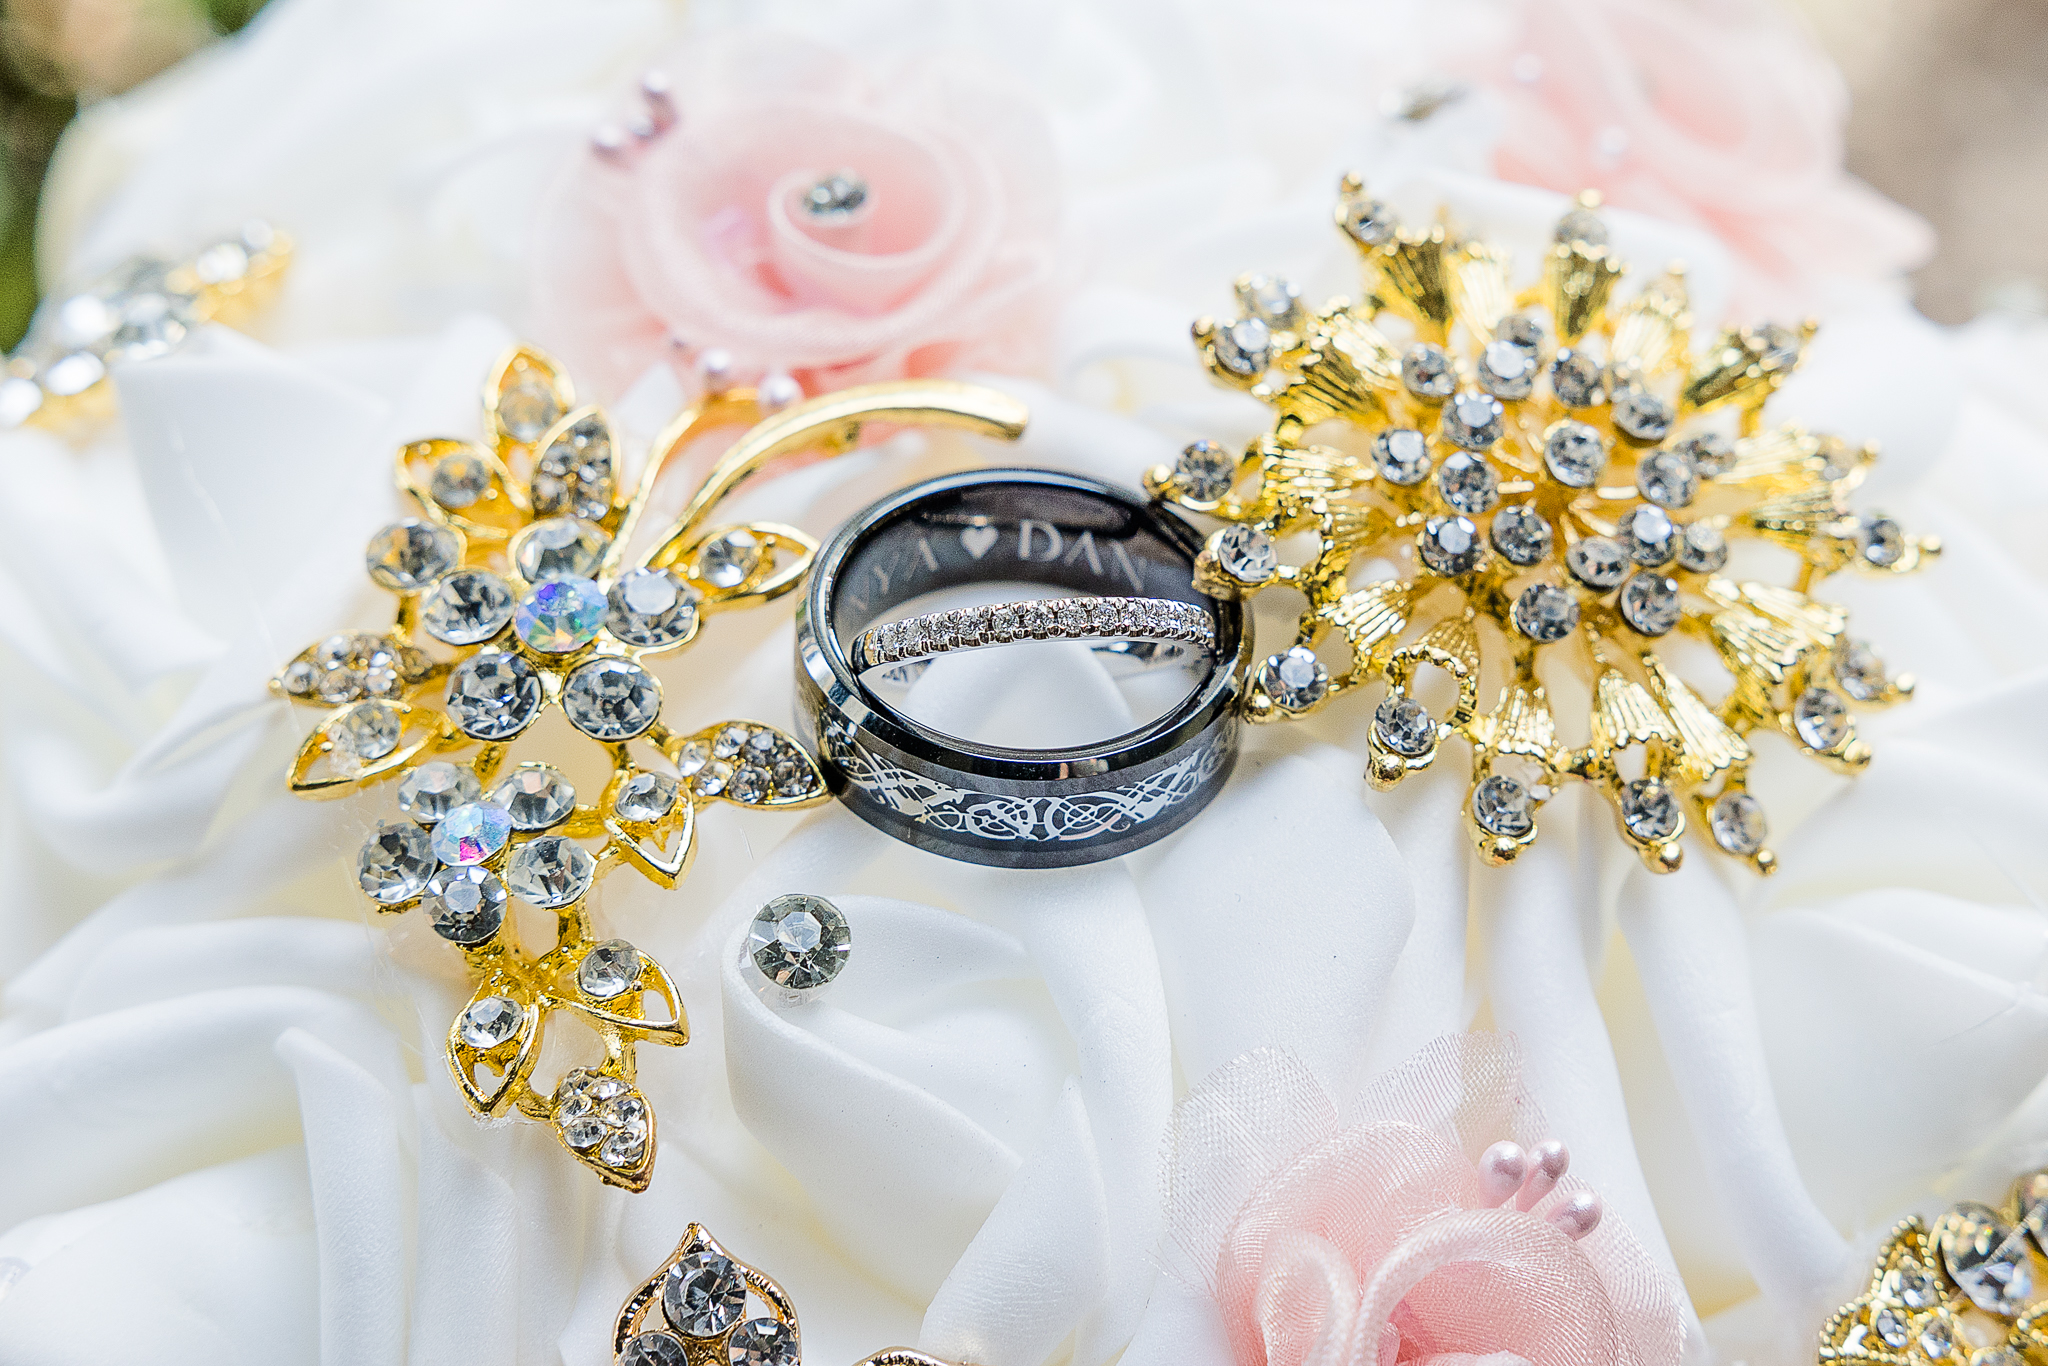 Carlsbad Photo wedding rings engraving ideas wedding rings engraving ideas